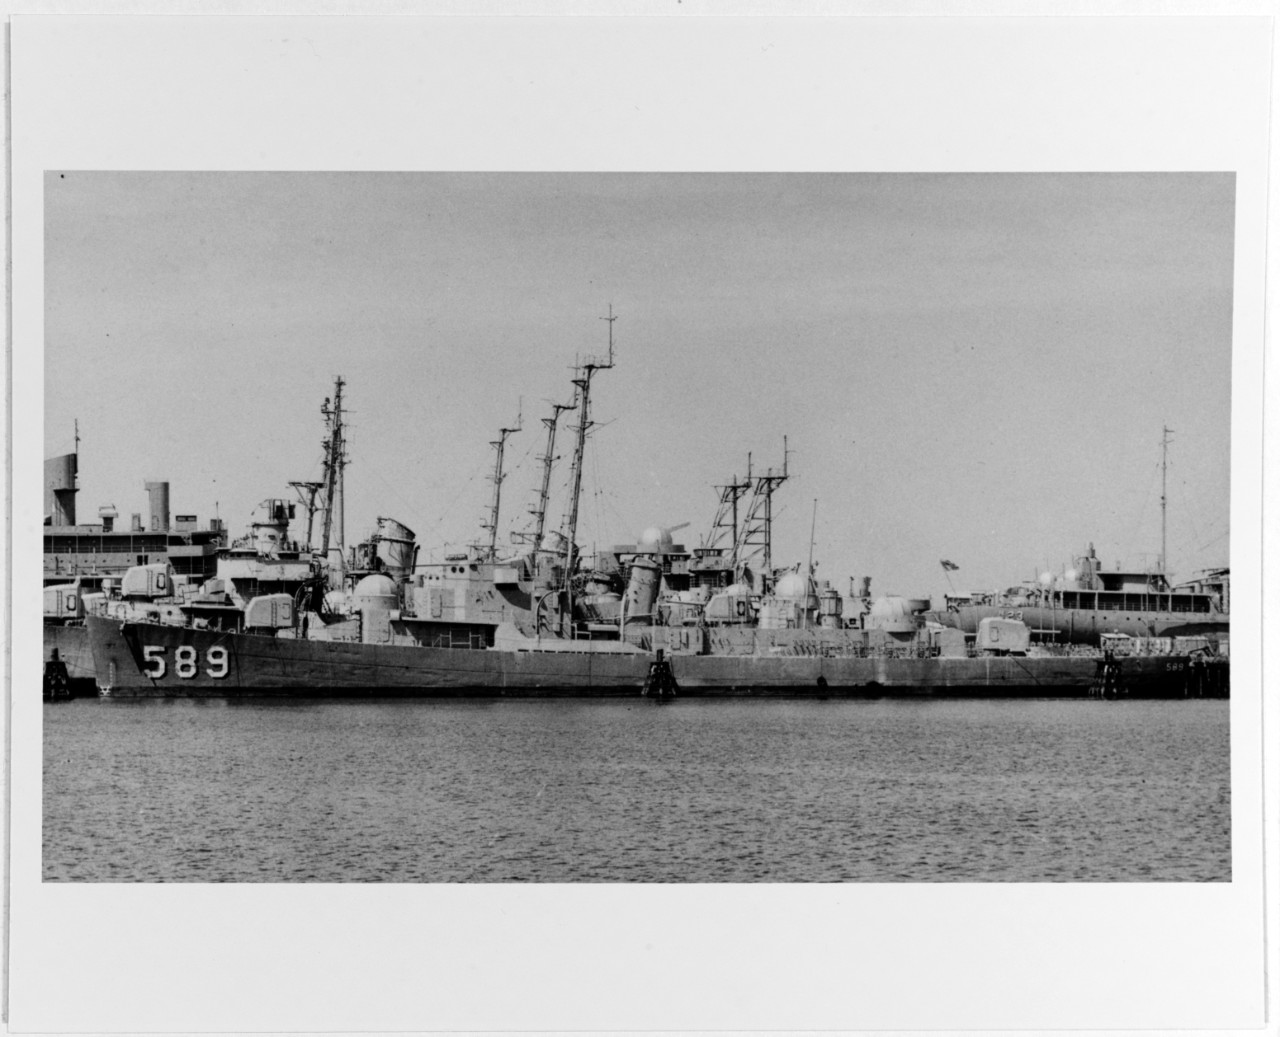 USS TINSMAN (DE-589)